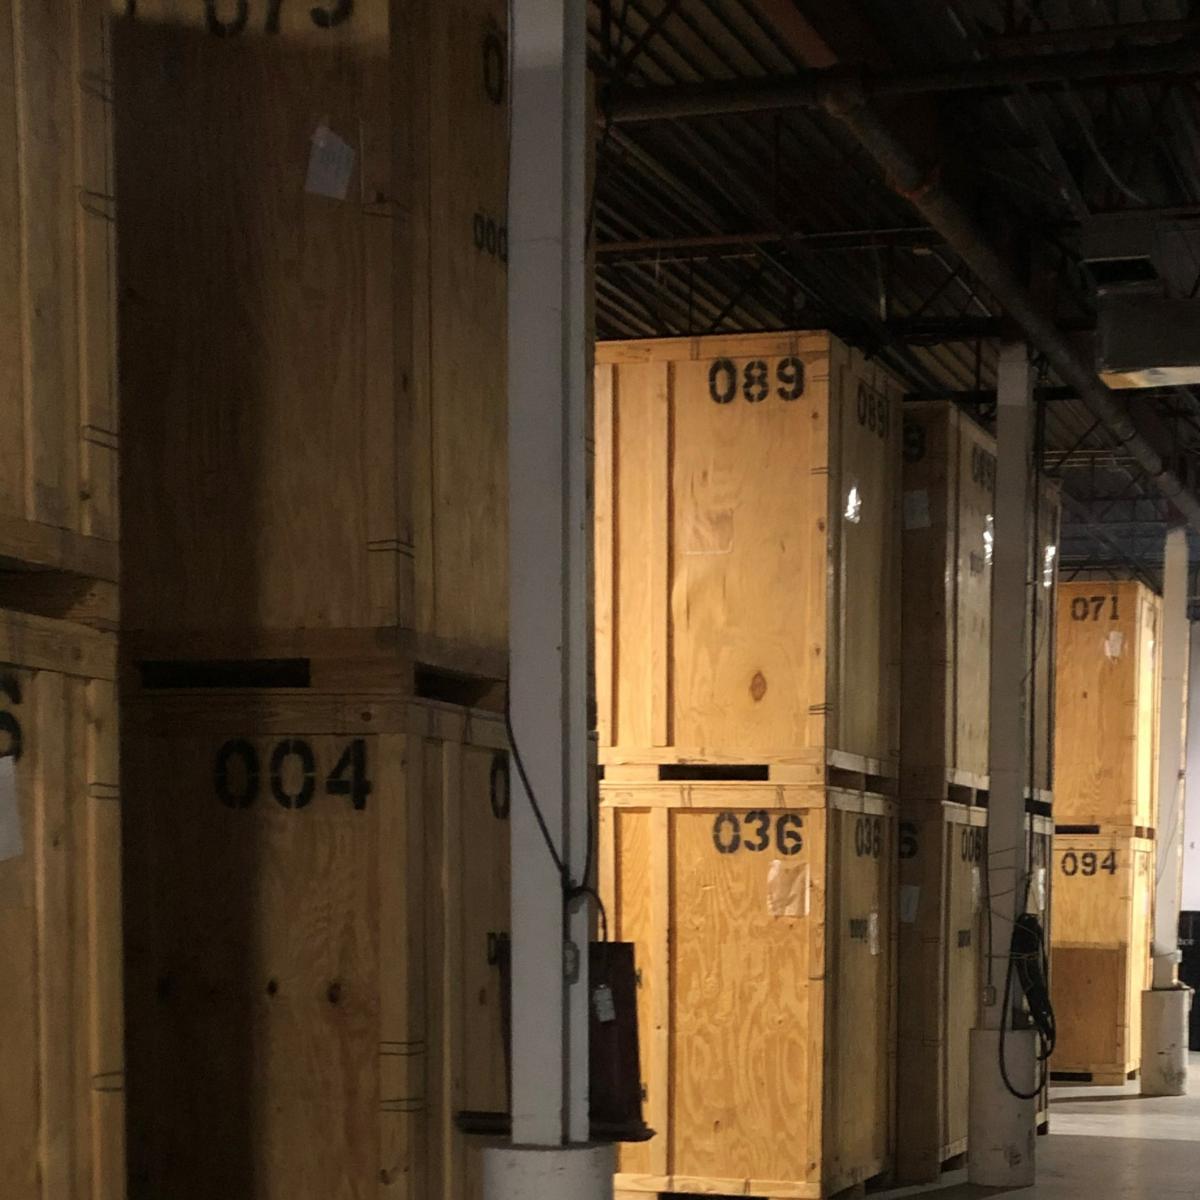 Brampton storage crates